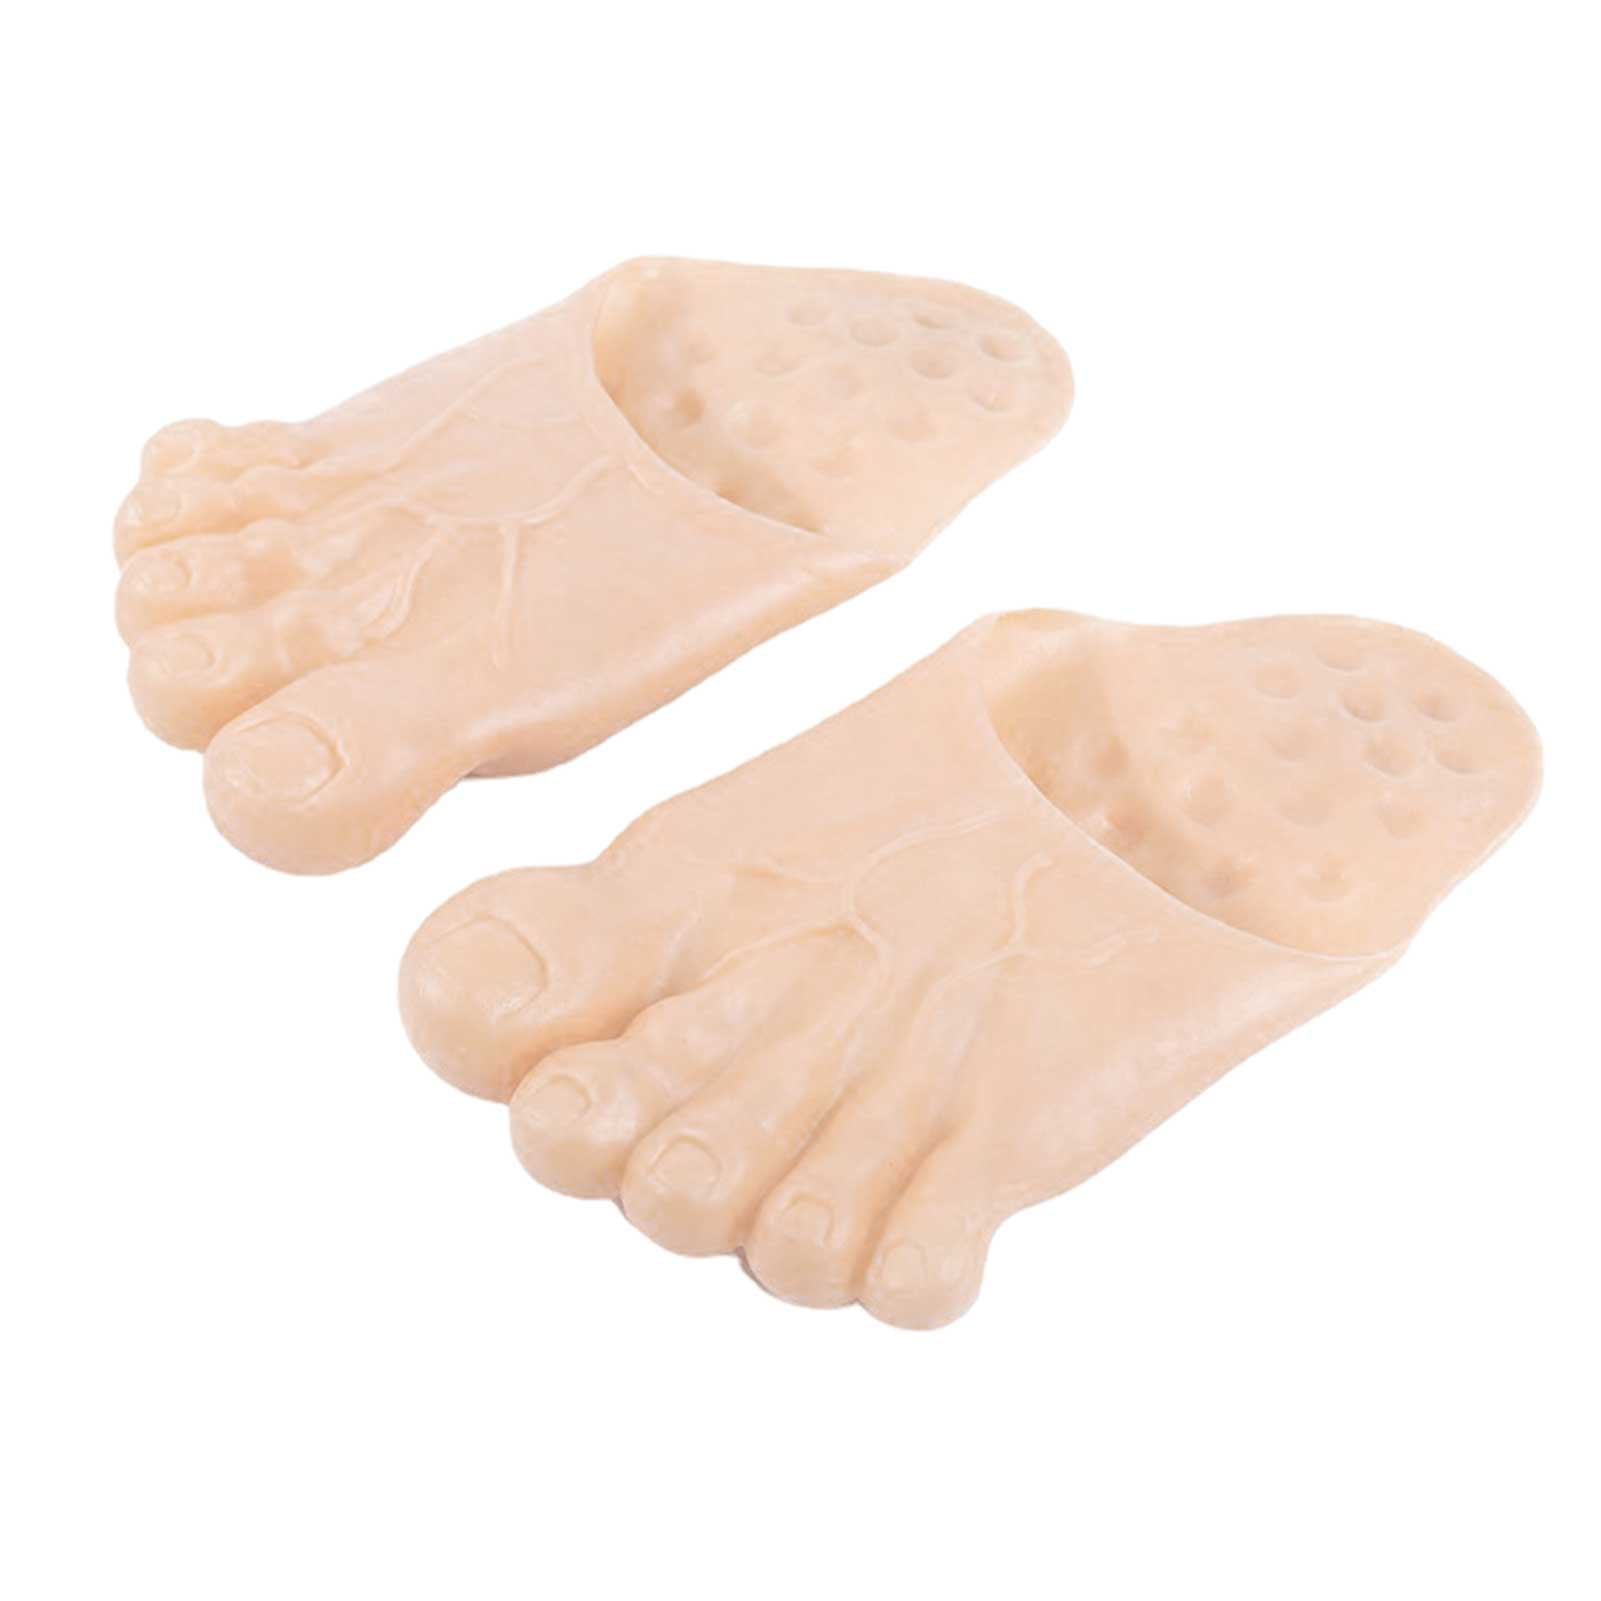 Funny Slippers Simulation Giant Toe Spoof Bare Feet Shoes - Walmart.com